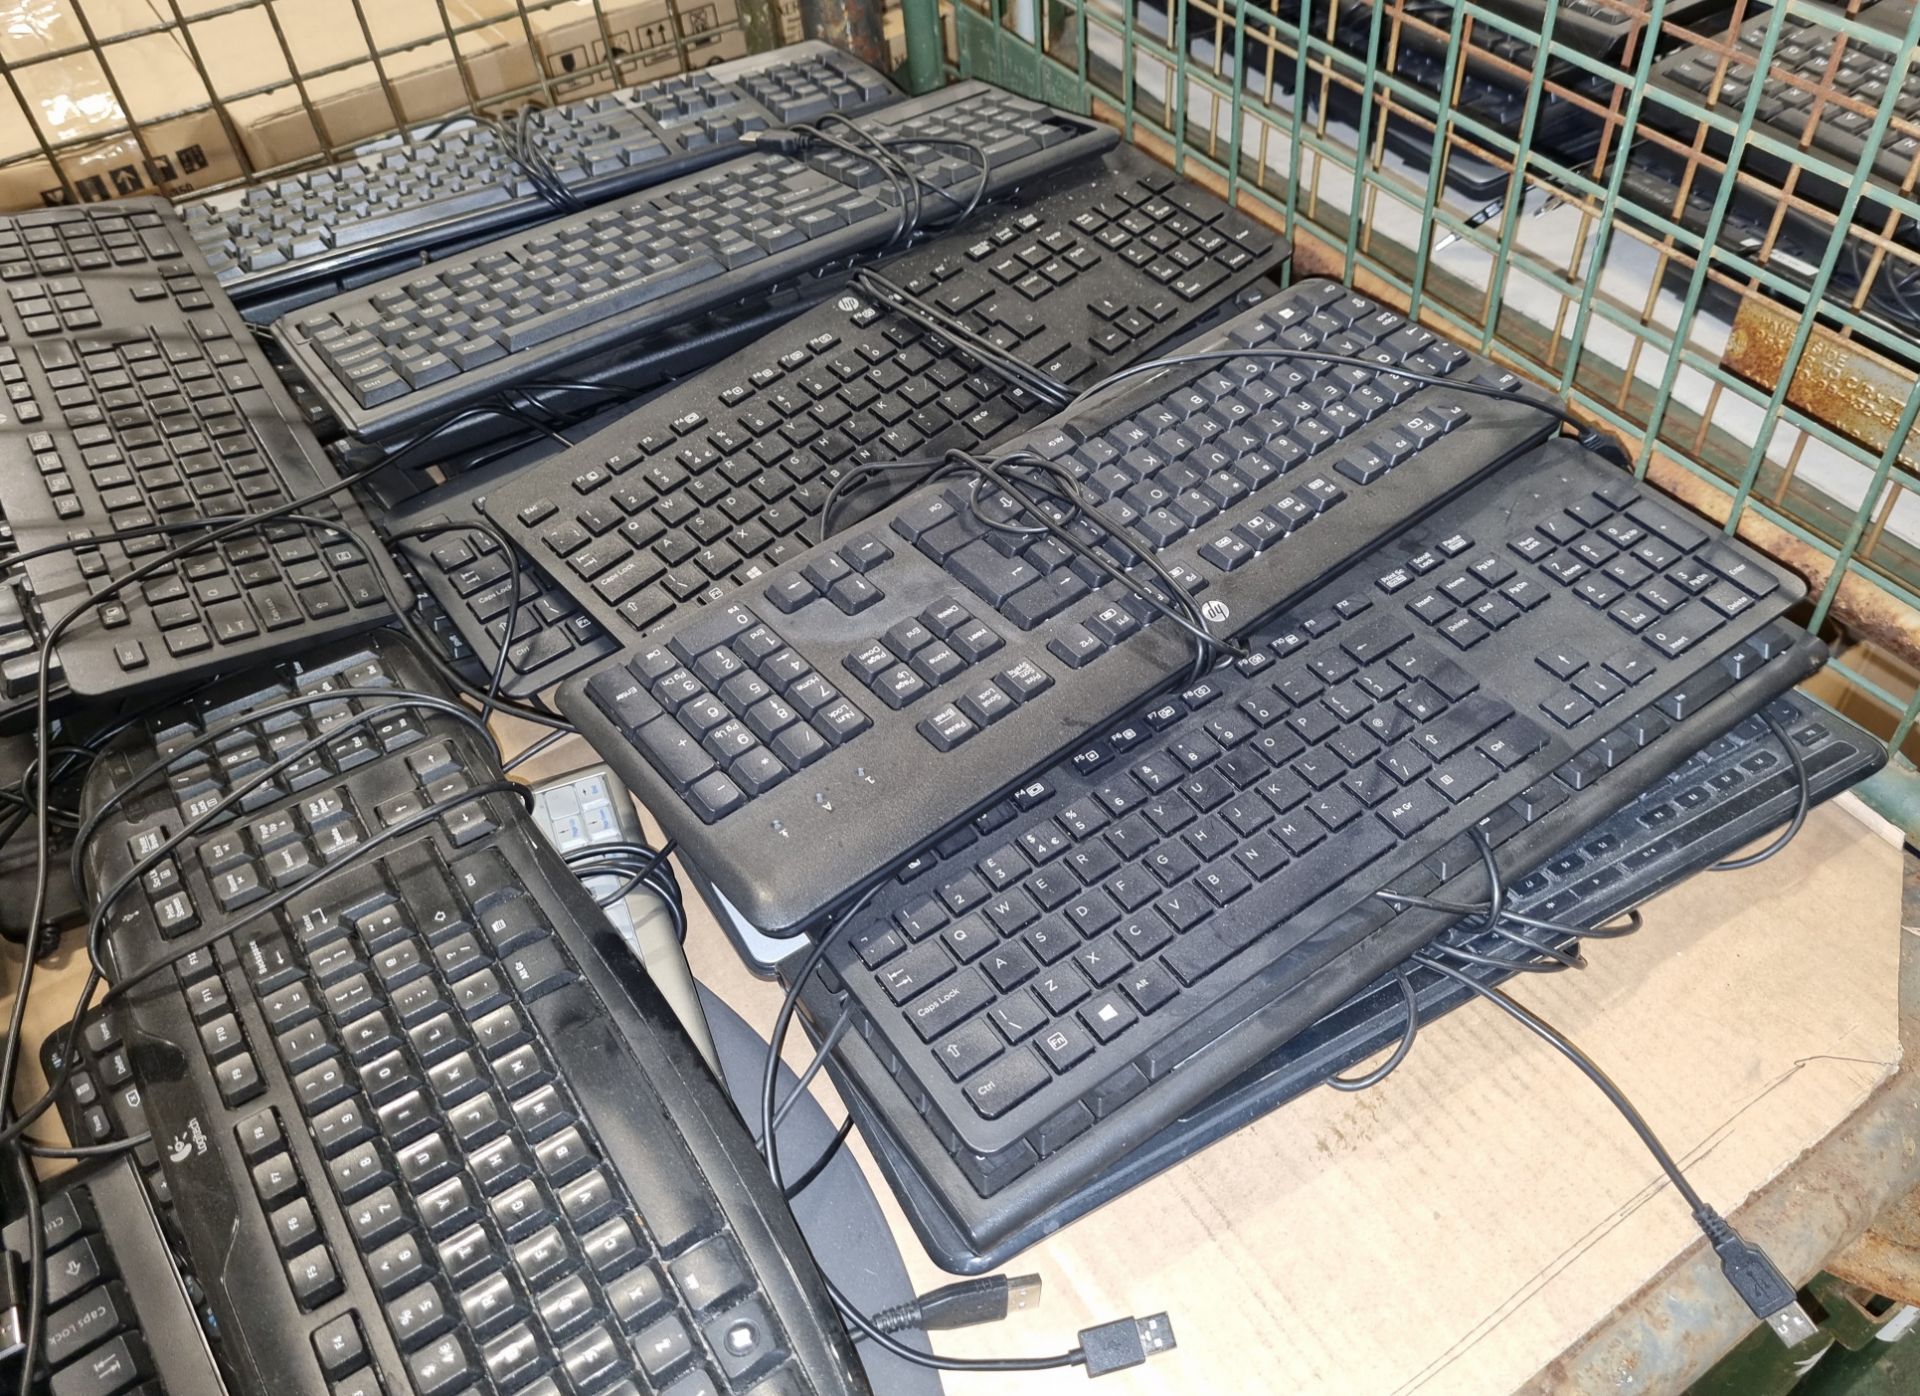 90x computer keyboards of multiple makes - HP, Logitech, Lenovo, Microsoft and Kensington - Bild 3 aus 5